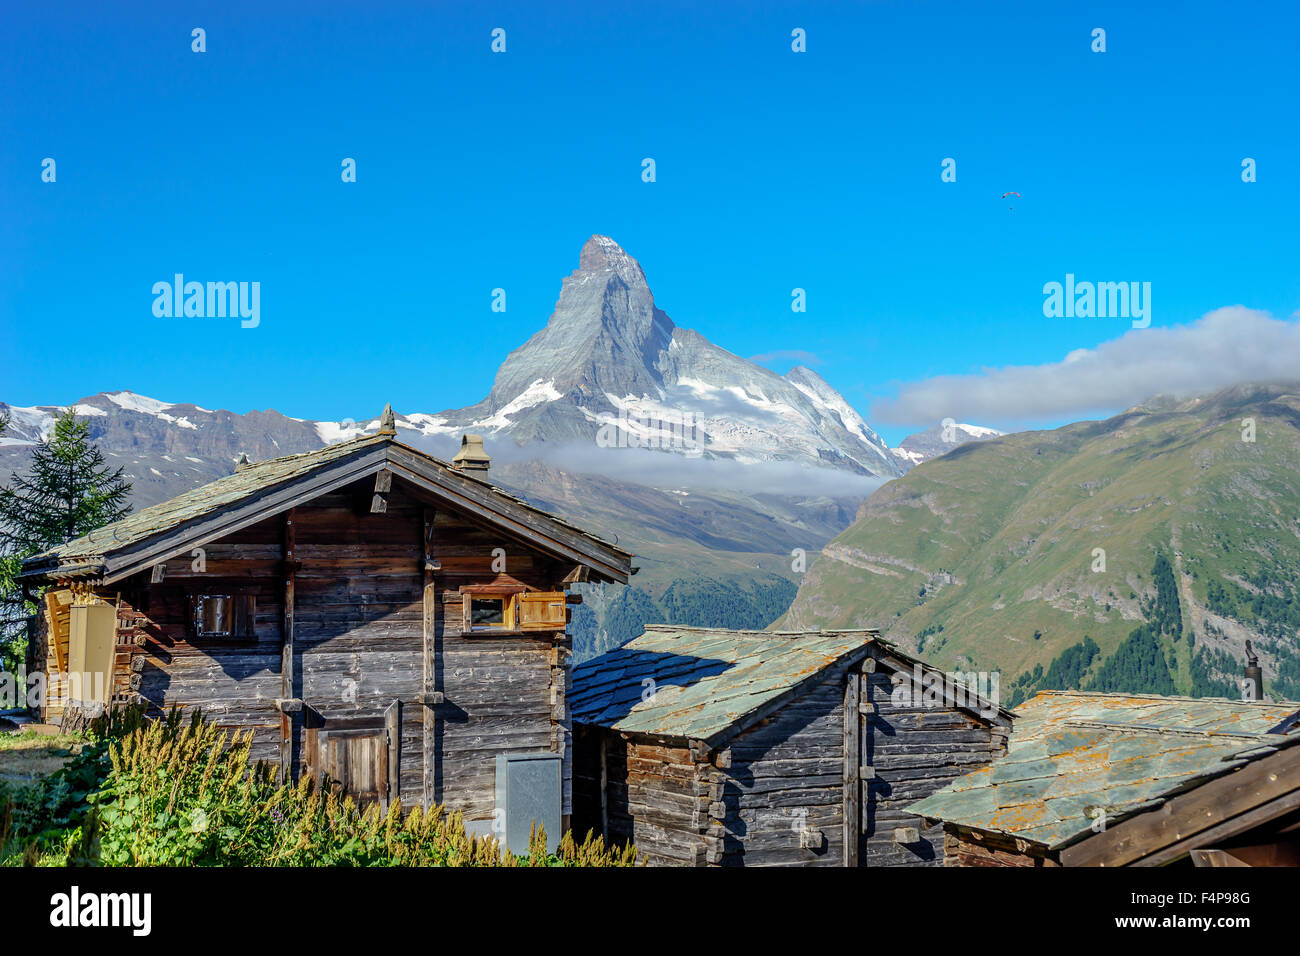 Cabins sit in a mountain village under the famous Matterhorn peak. July, 2015. Matterhorn, Switzerland. Stock Photo